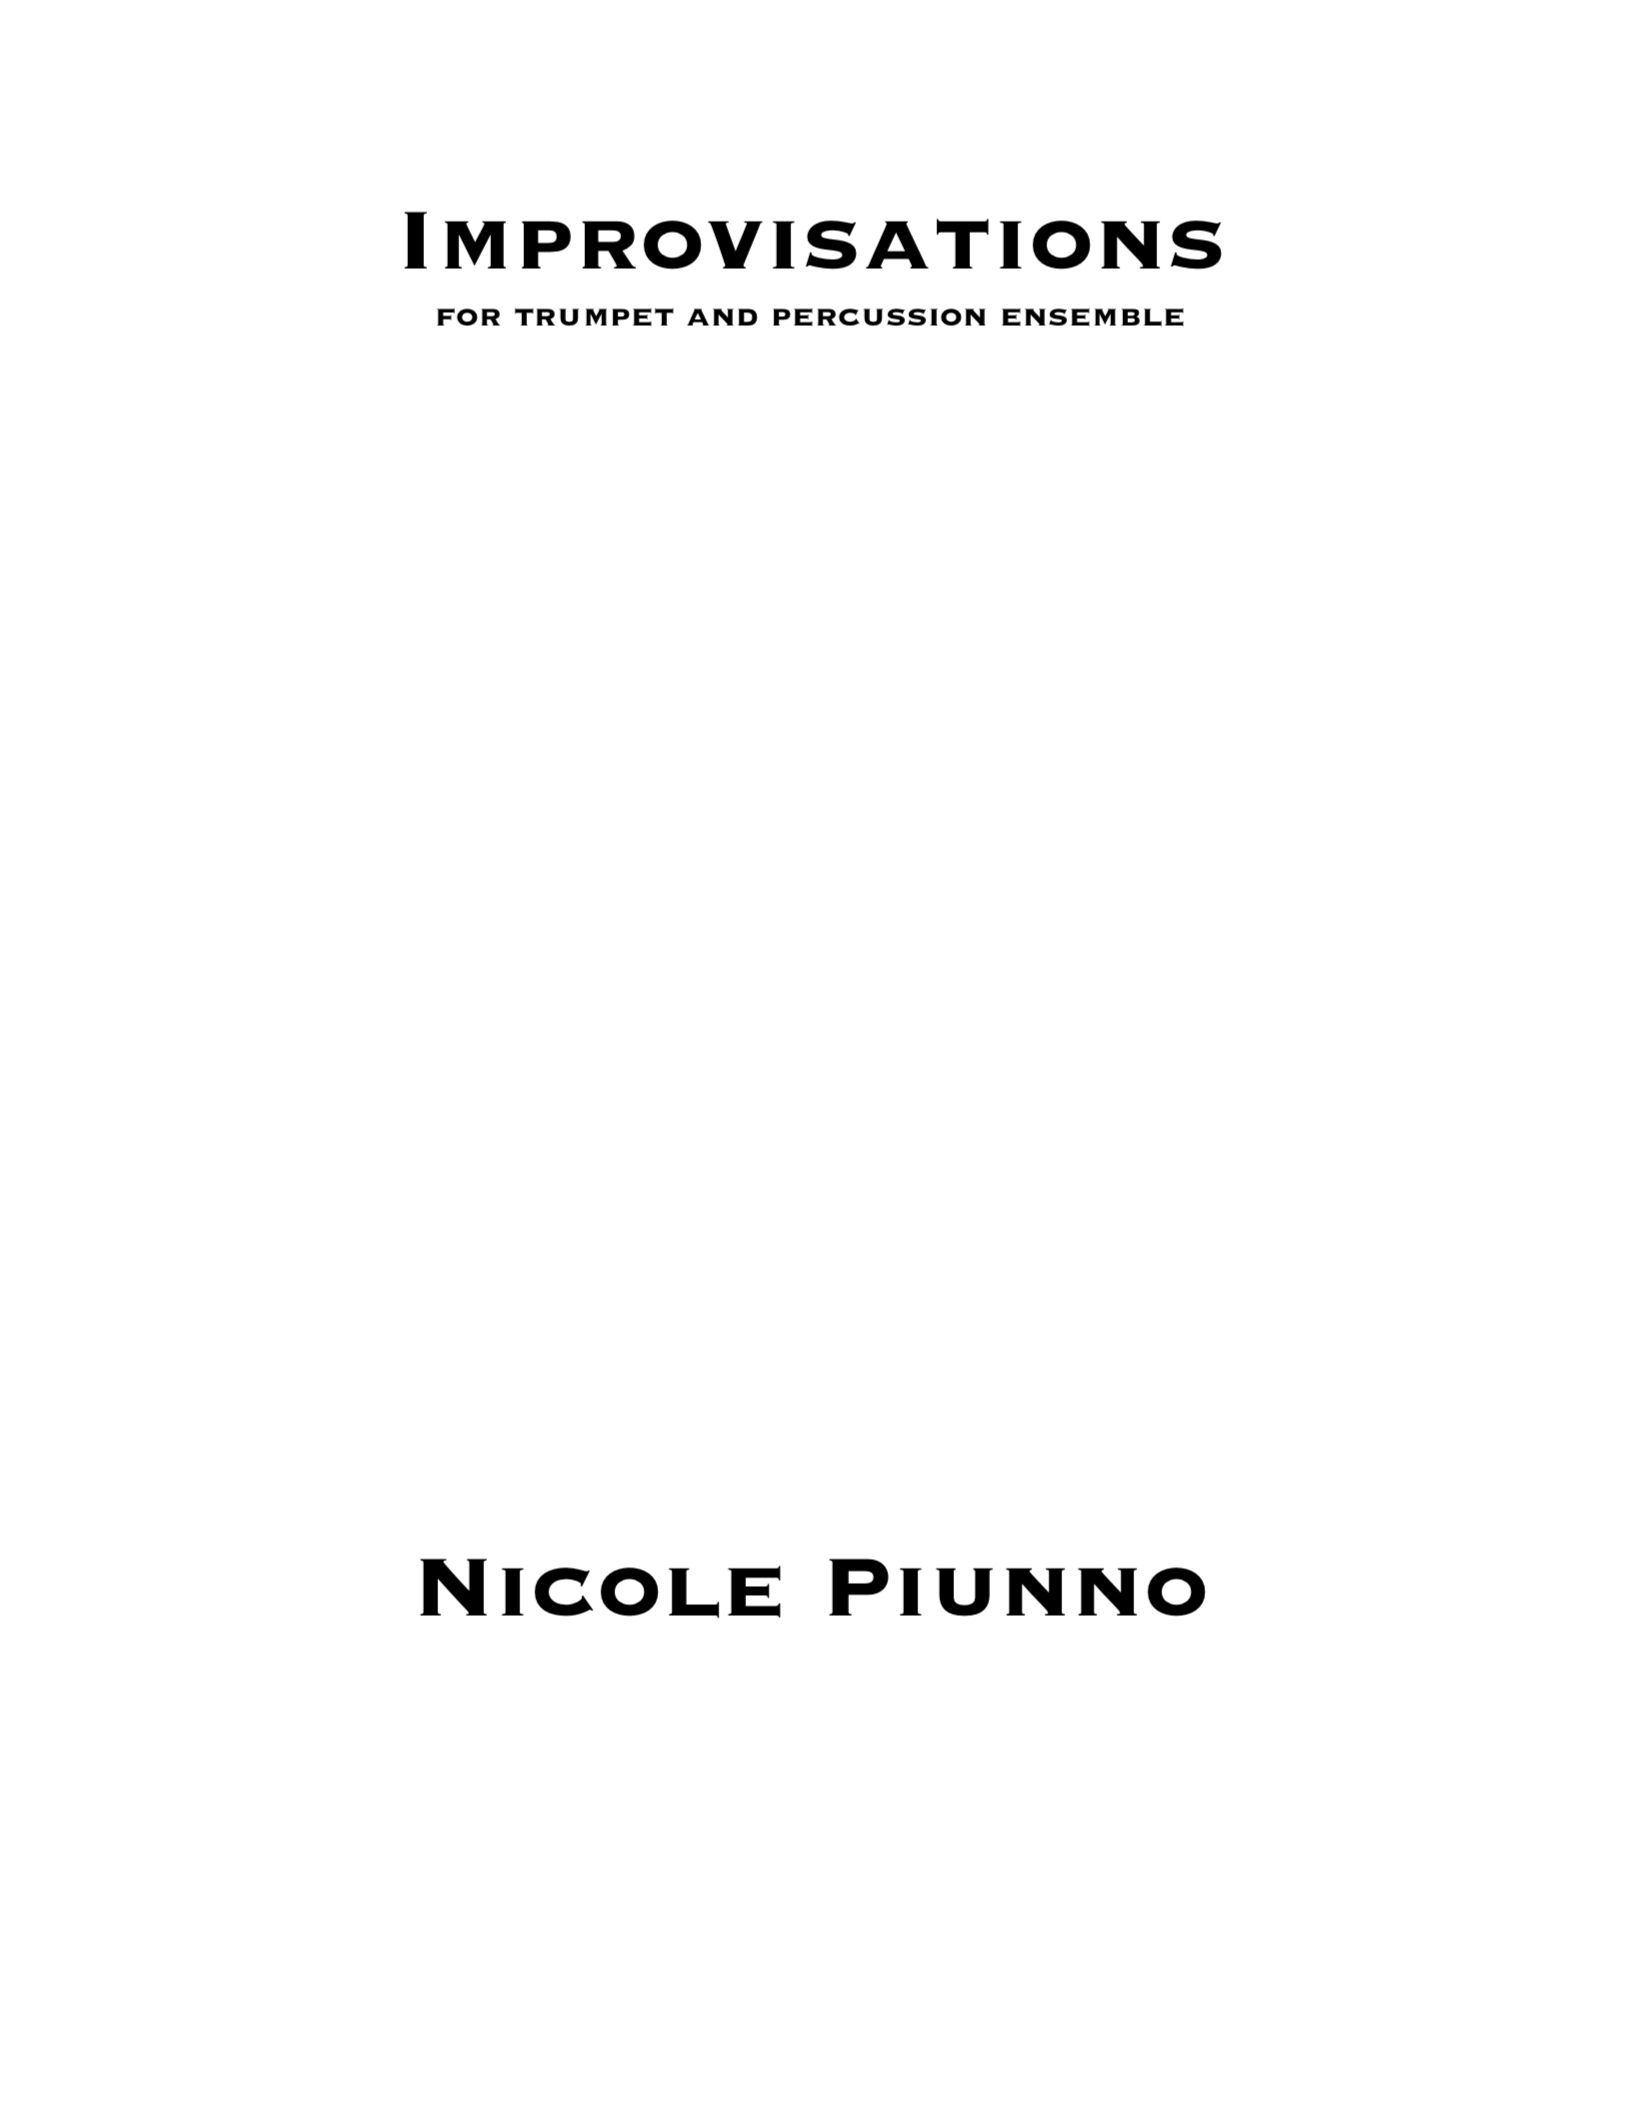 Improvisations by Nicole Piunno